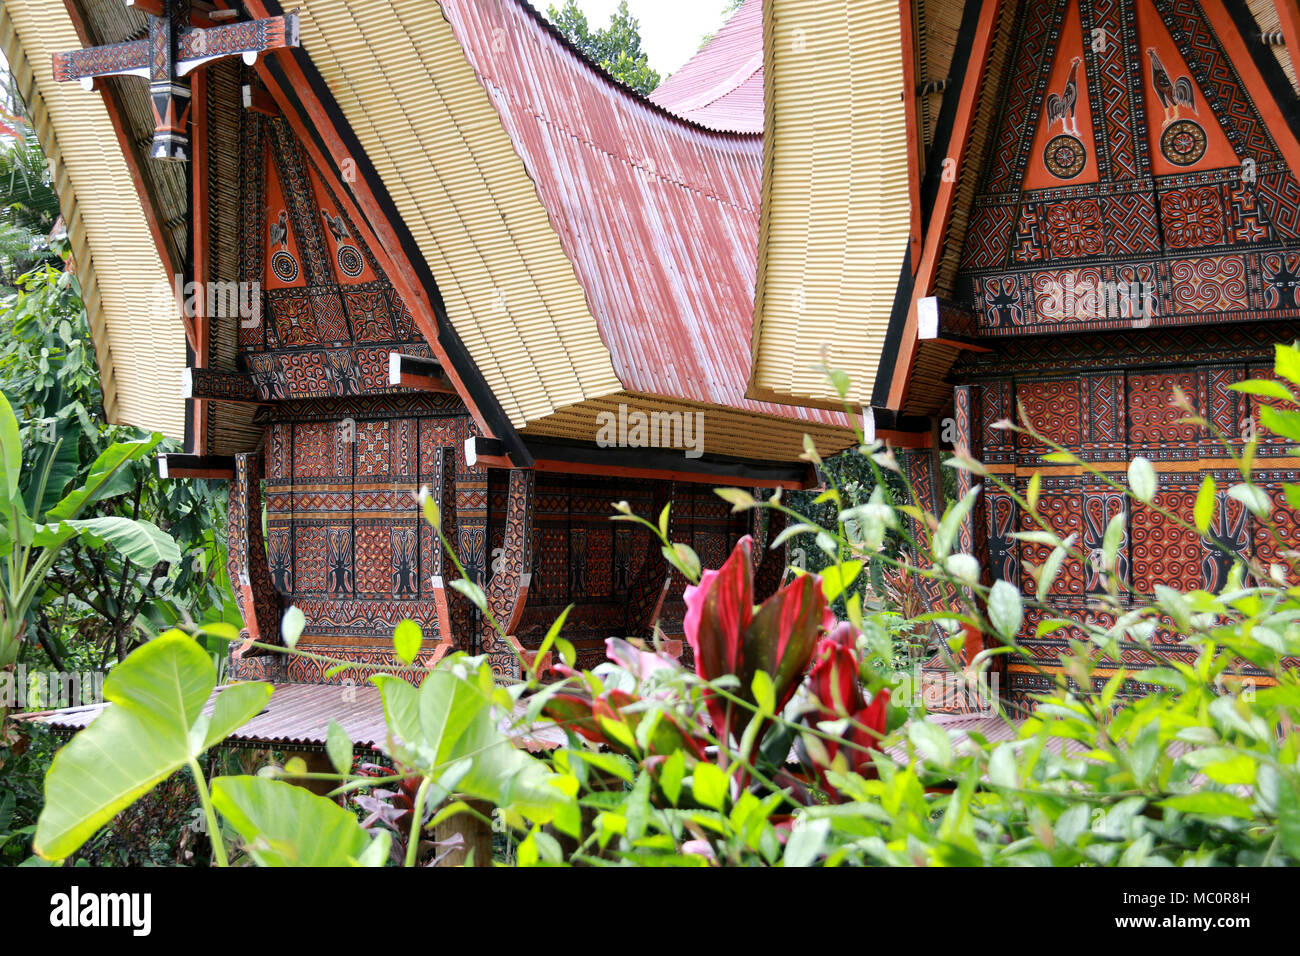 Tongkonans, traditional Toraja houses with massive peaked-roofs, in a Village near Ke’te’ Ke’su, Toraja, Sulawesi, Indonesia Stock Photo